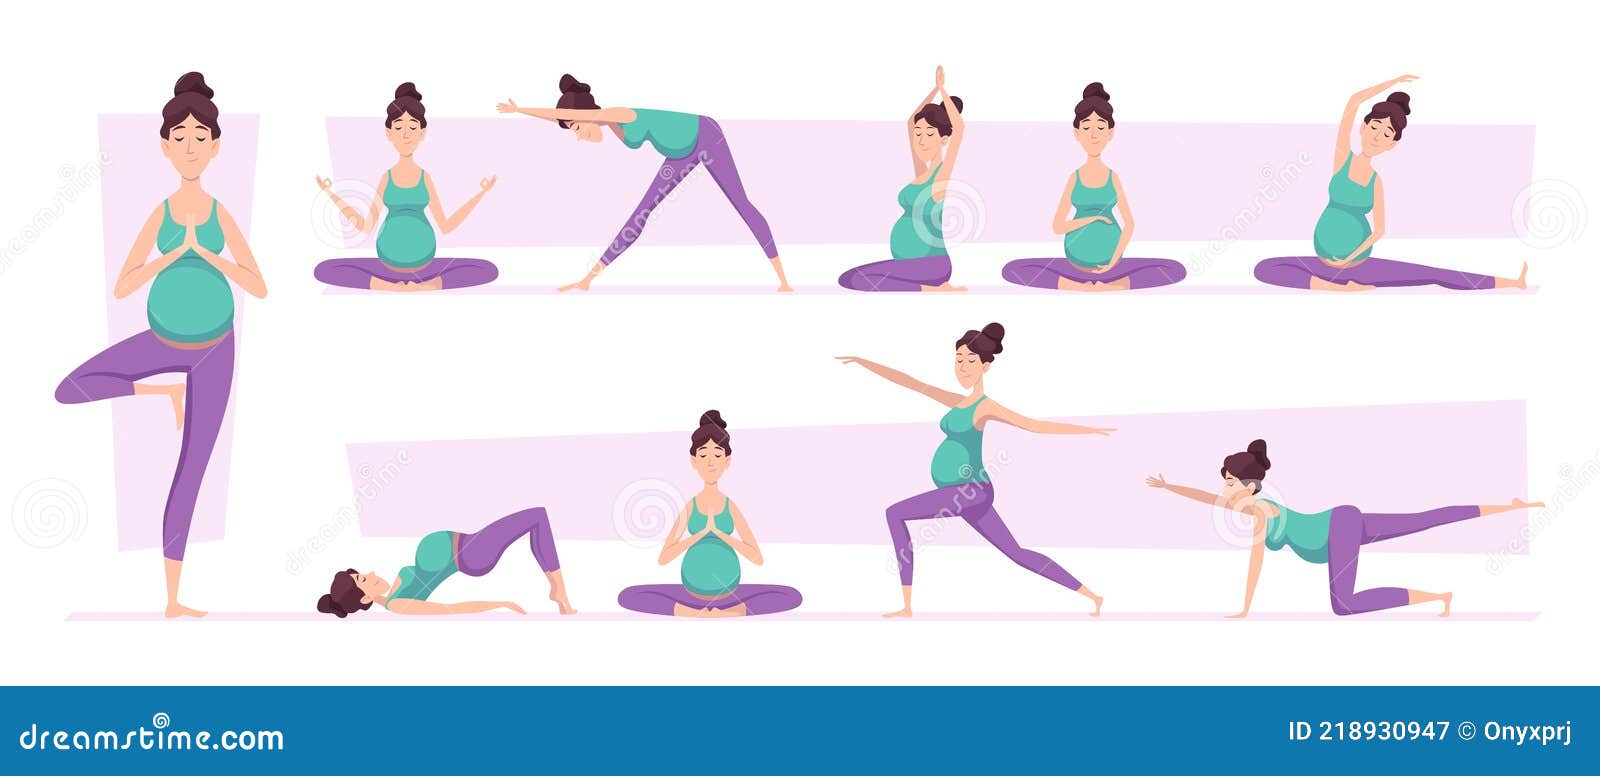 Details 136+ pre pregnancy yoga poses best - xkldase.edu.vn